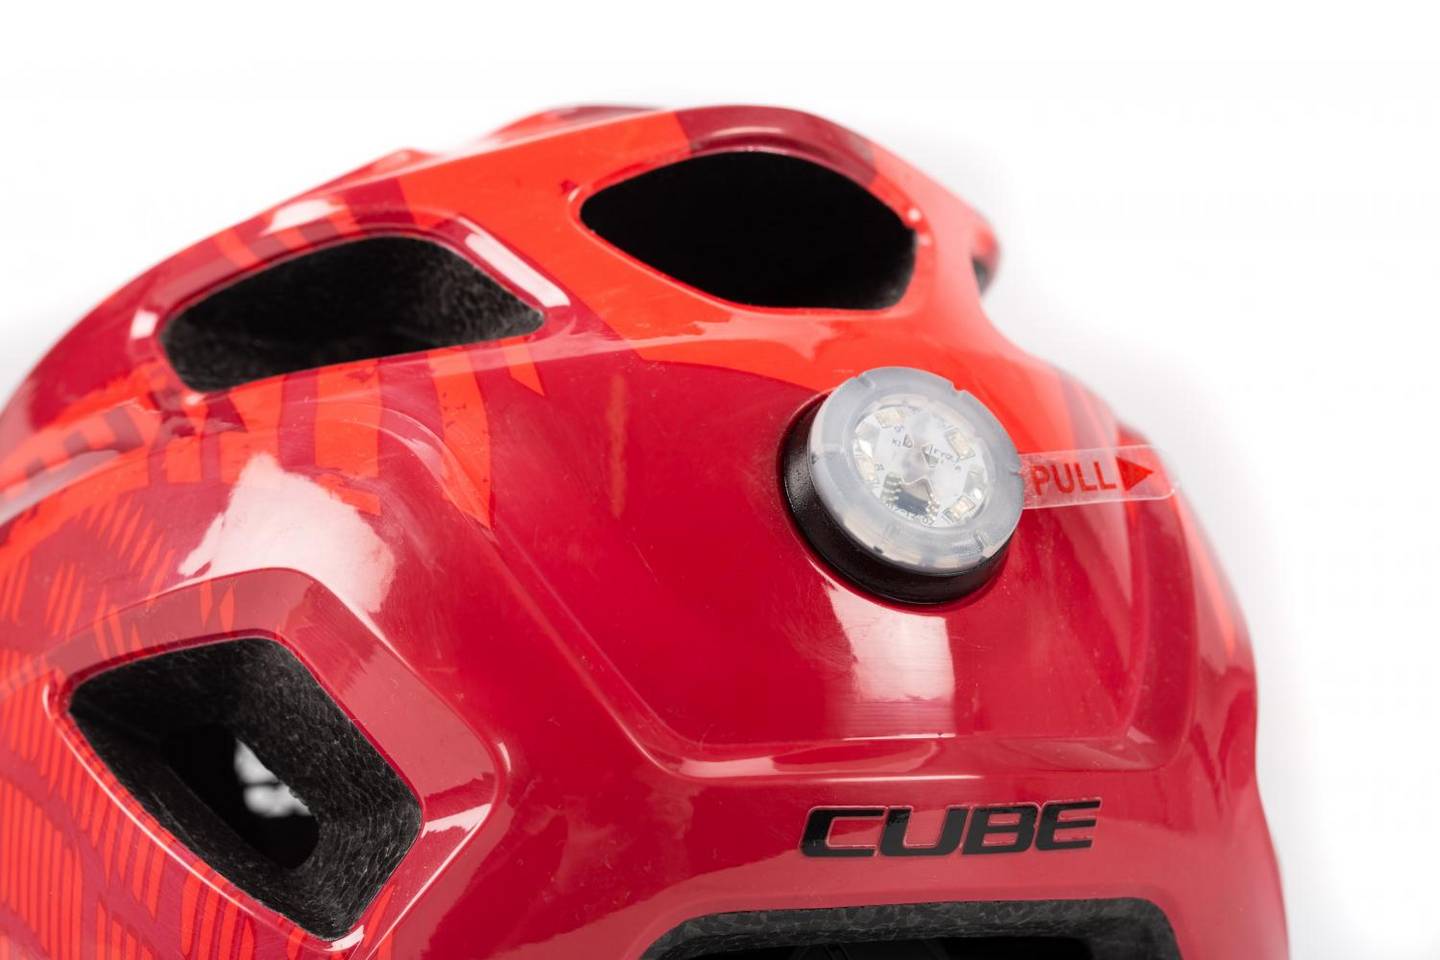 CUBE Helm ANT  / red splash S (49-55)